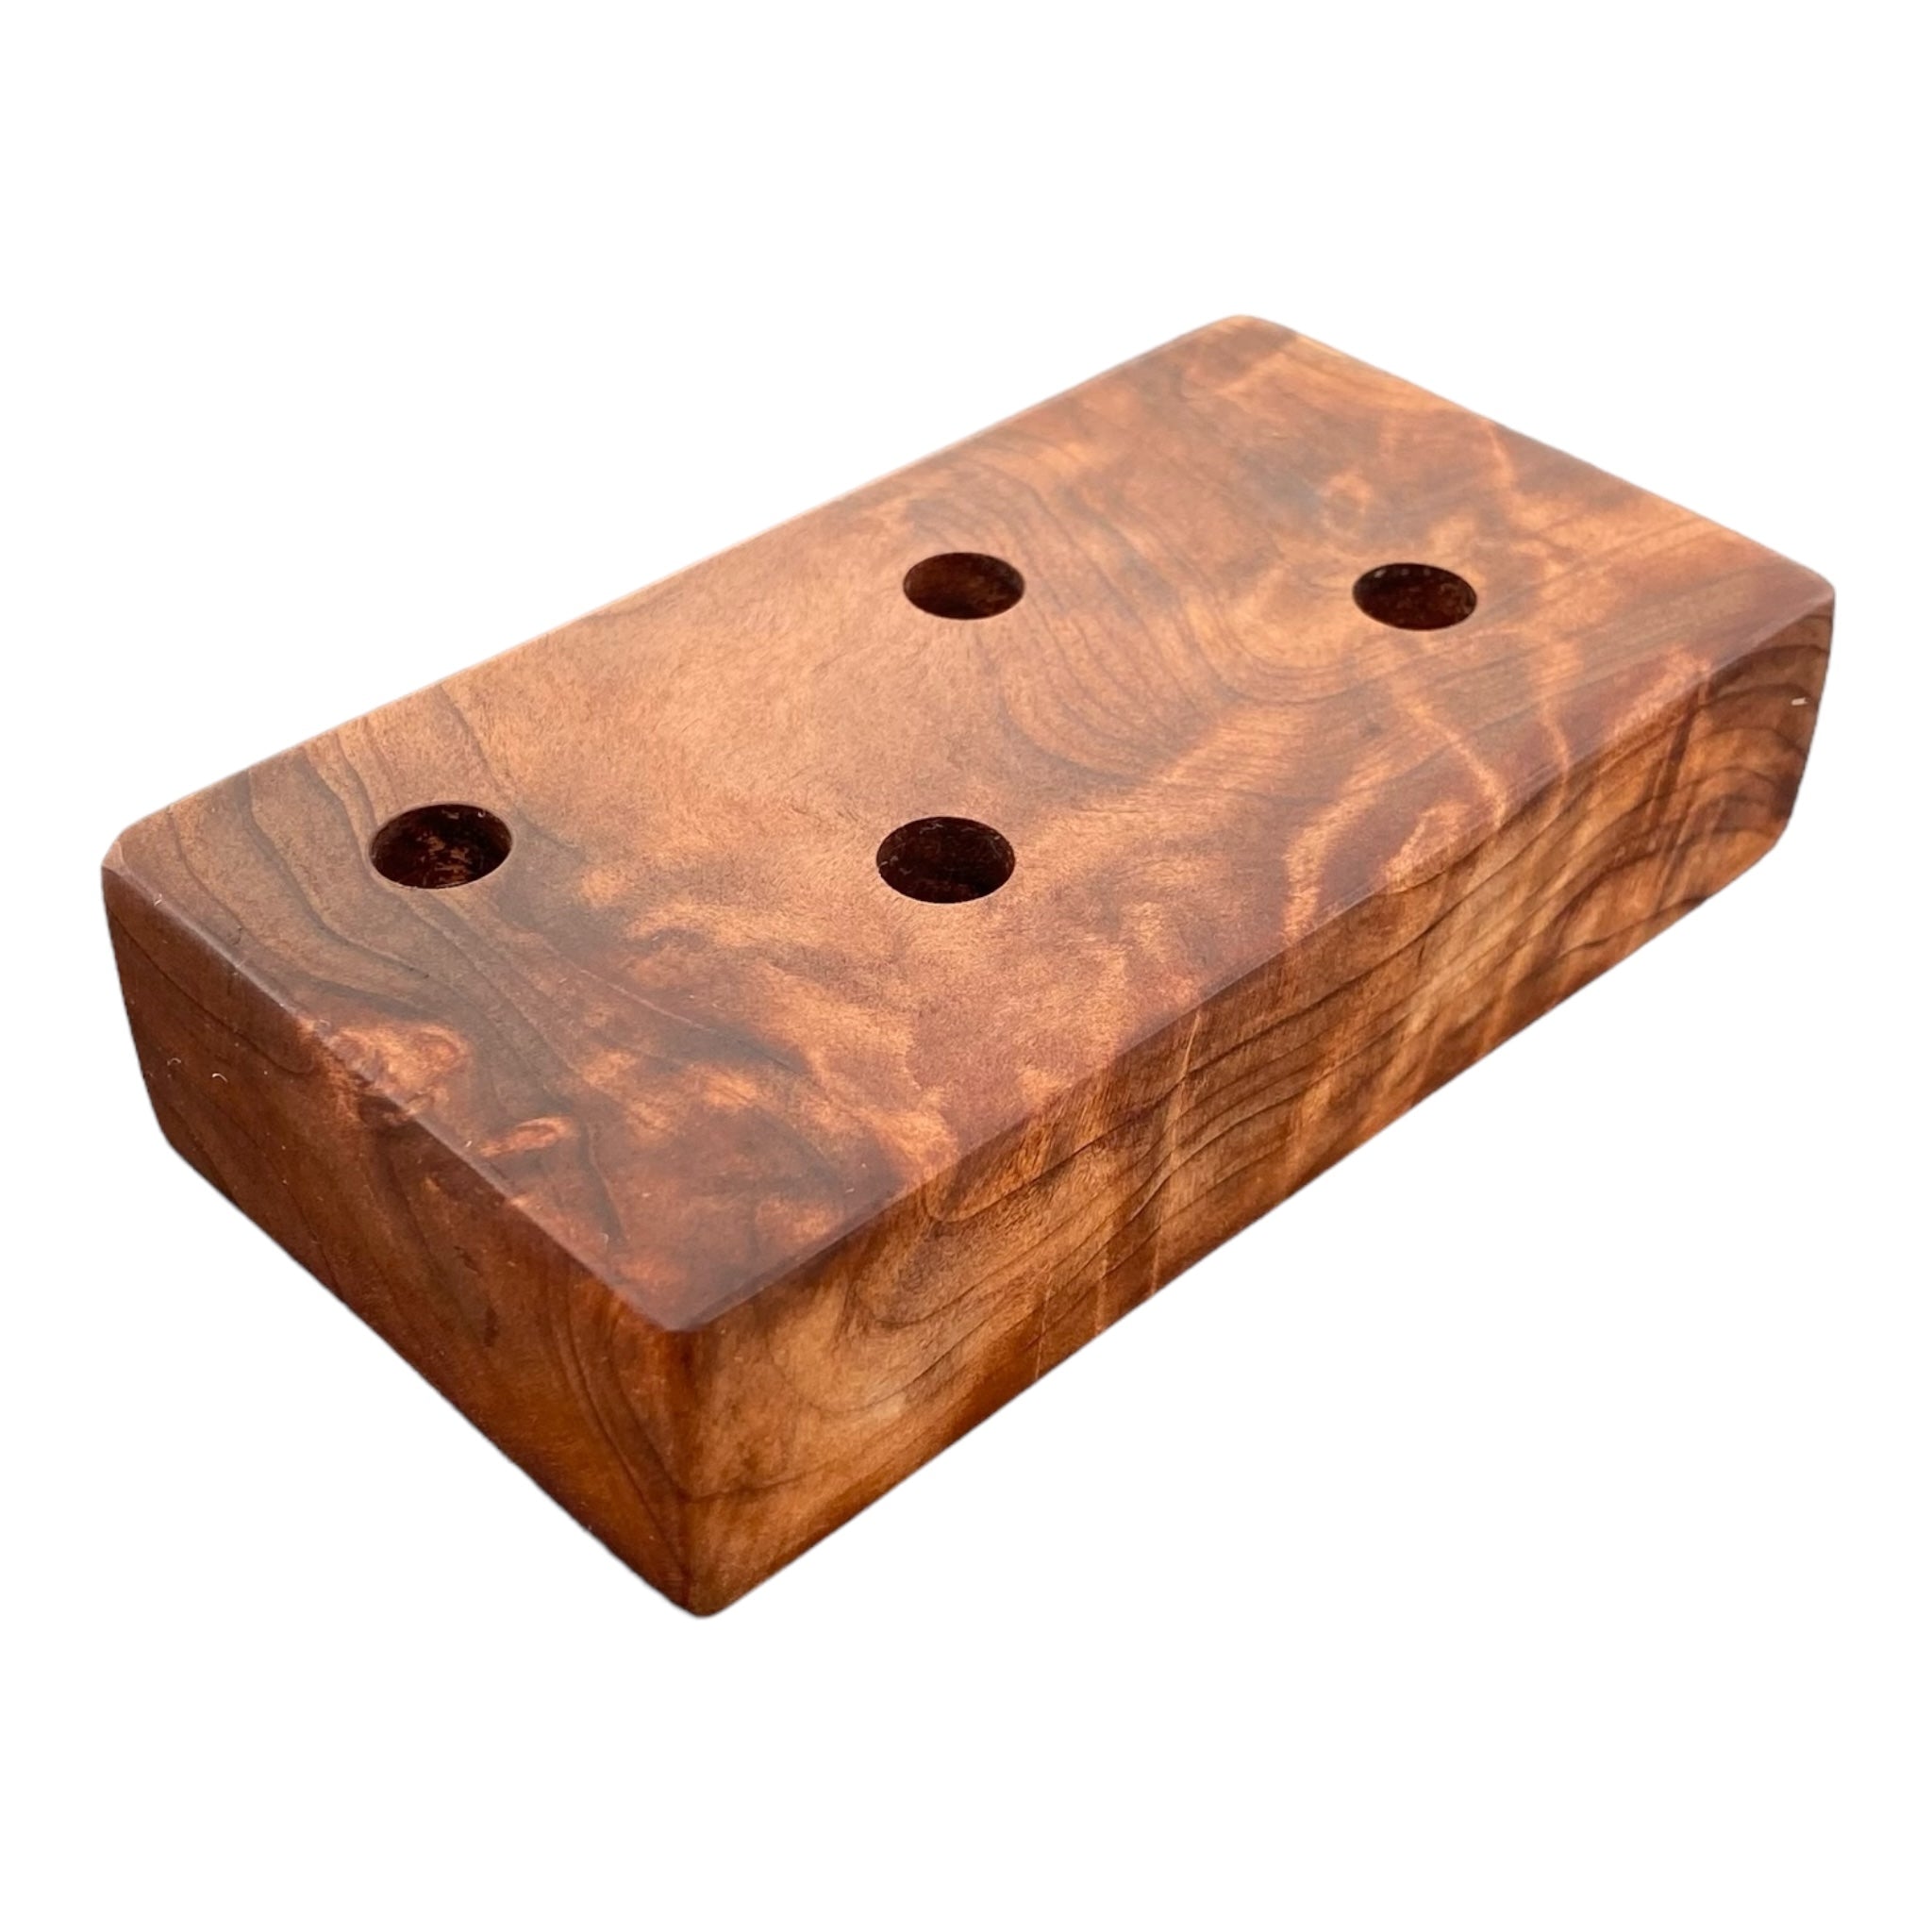 4 Hole Wood Display Stand Holder For 10mm Bong Bowl Pieces Or Quartz Bangers - Redwood Burl